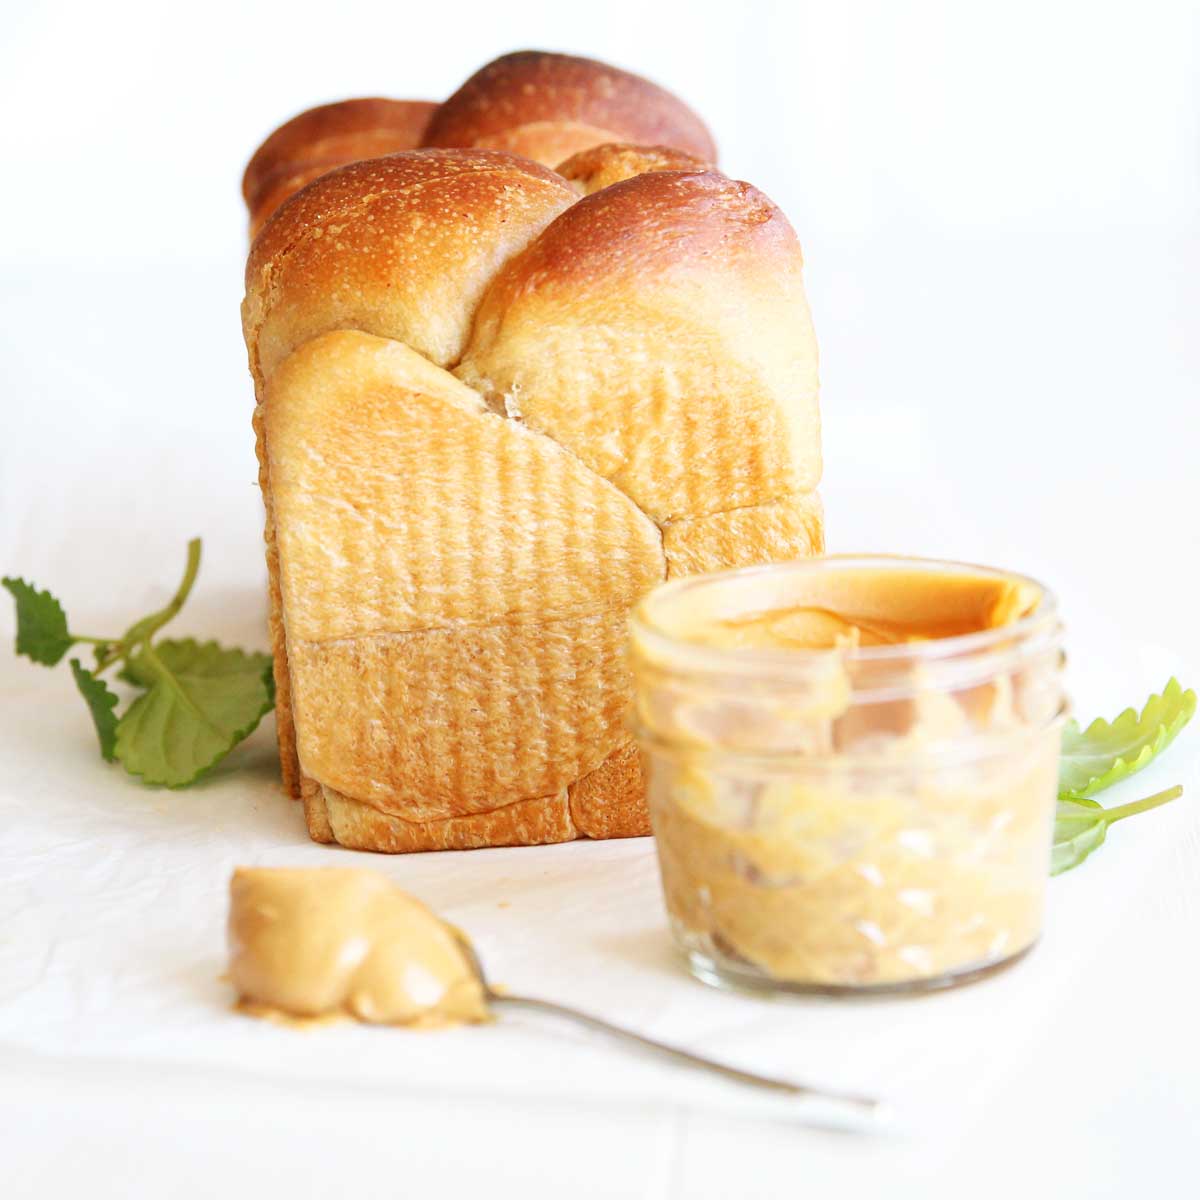 Peanut Butter Yeast Bread (A Healthier Vegan "Brioche" Recipe) - Cranberry Pumpkin Bread